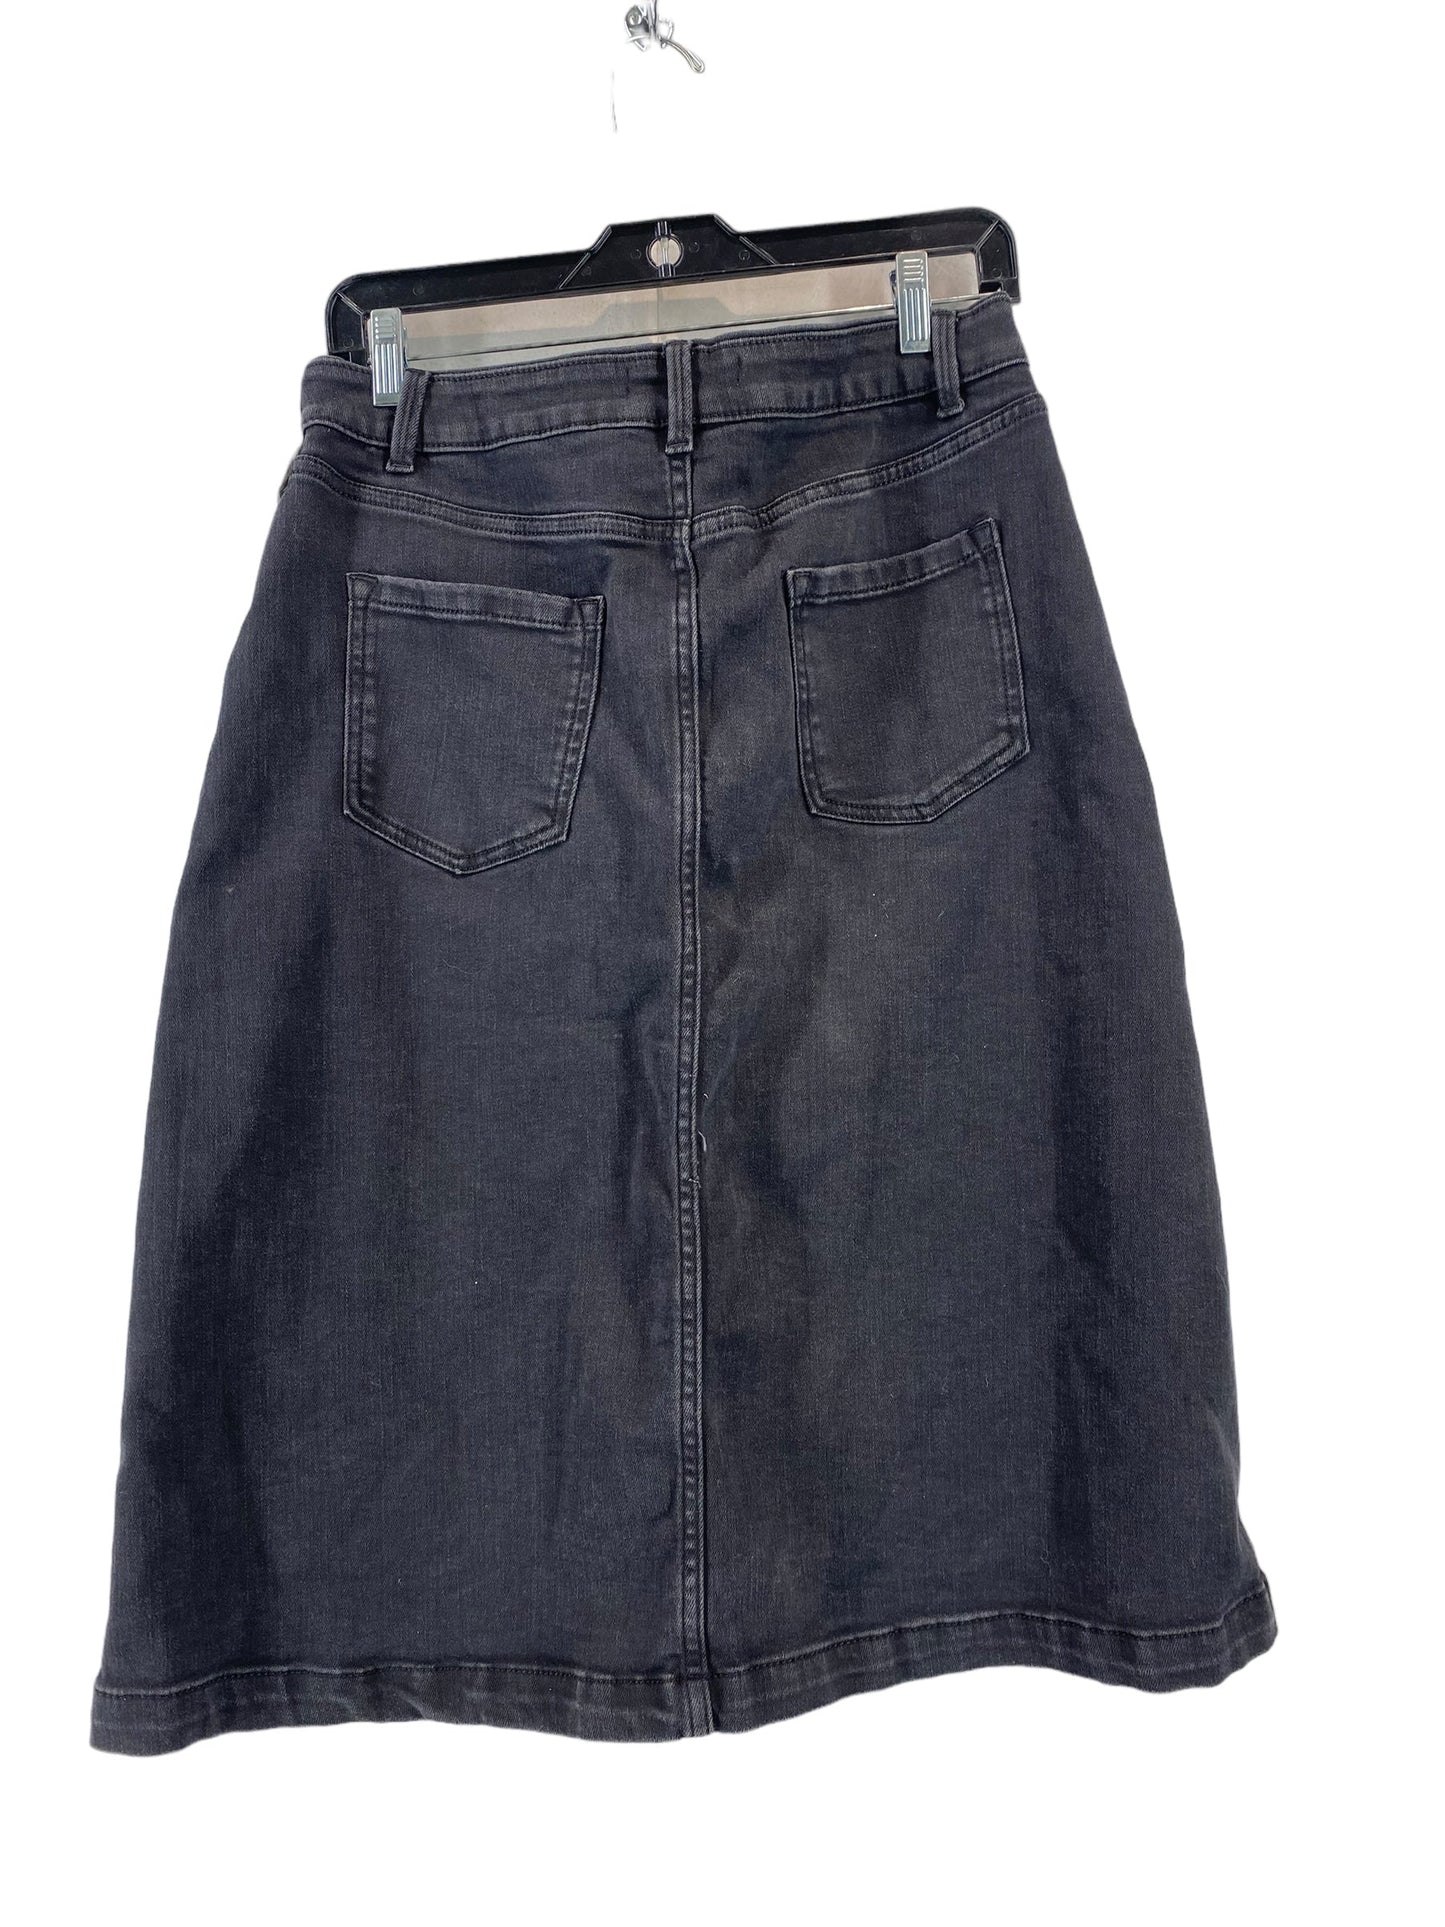 Black Skirt Midi Liz Claiborne, Size 4